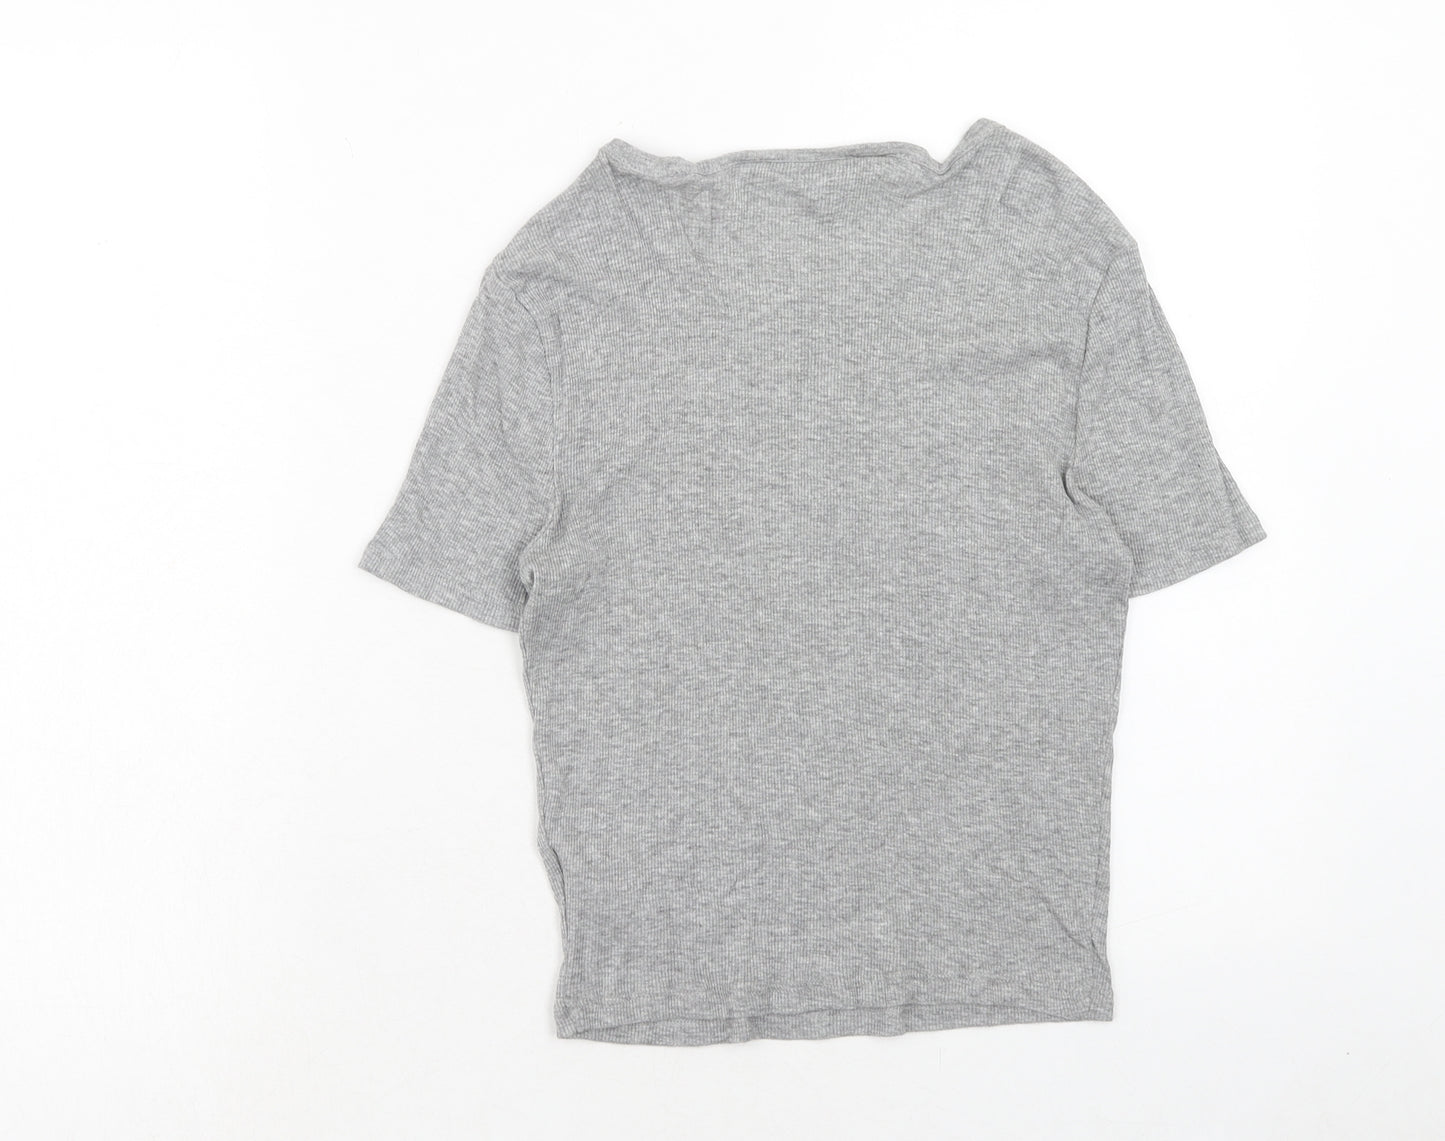 NEXT Girls Grey Cotton Basic T-Shirt Size 14-15 Years Round Neck Pullover